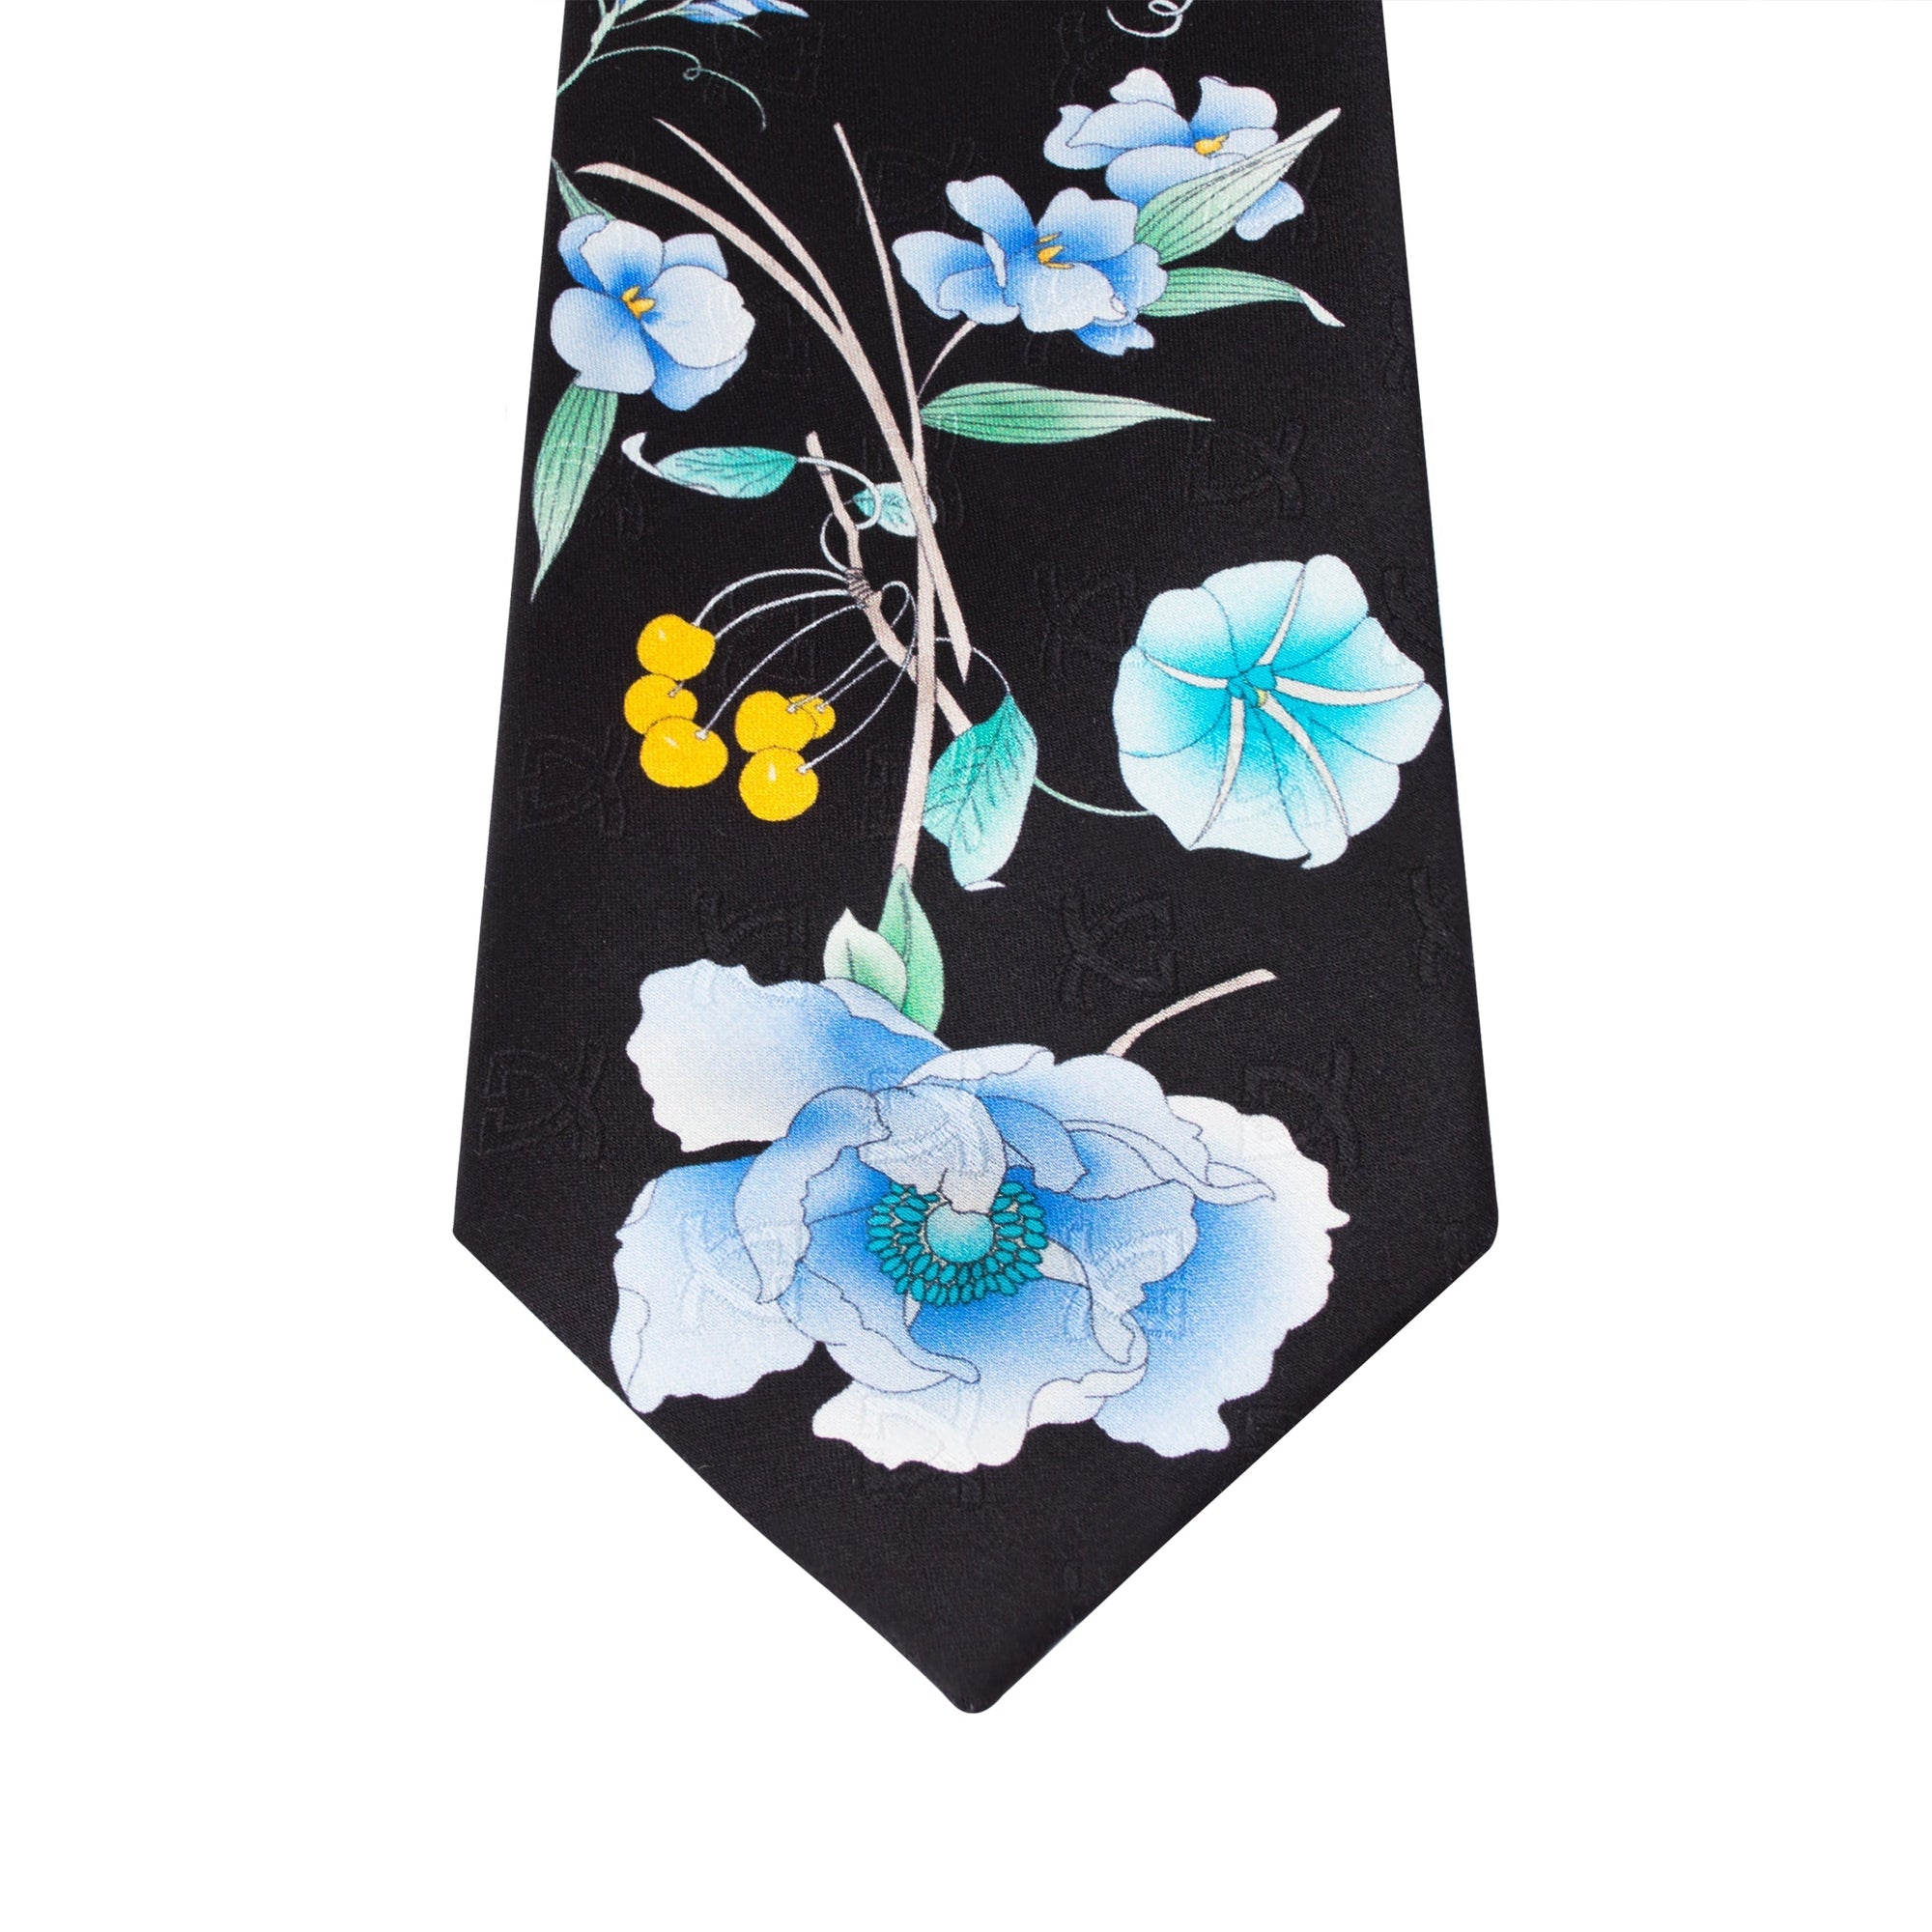 Leonard Black Silk Satin 8cm Tie with Floral and Yellow Cherry Prints-Cufflinks.com.sg | Neckties.com.sg